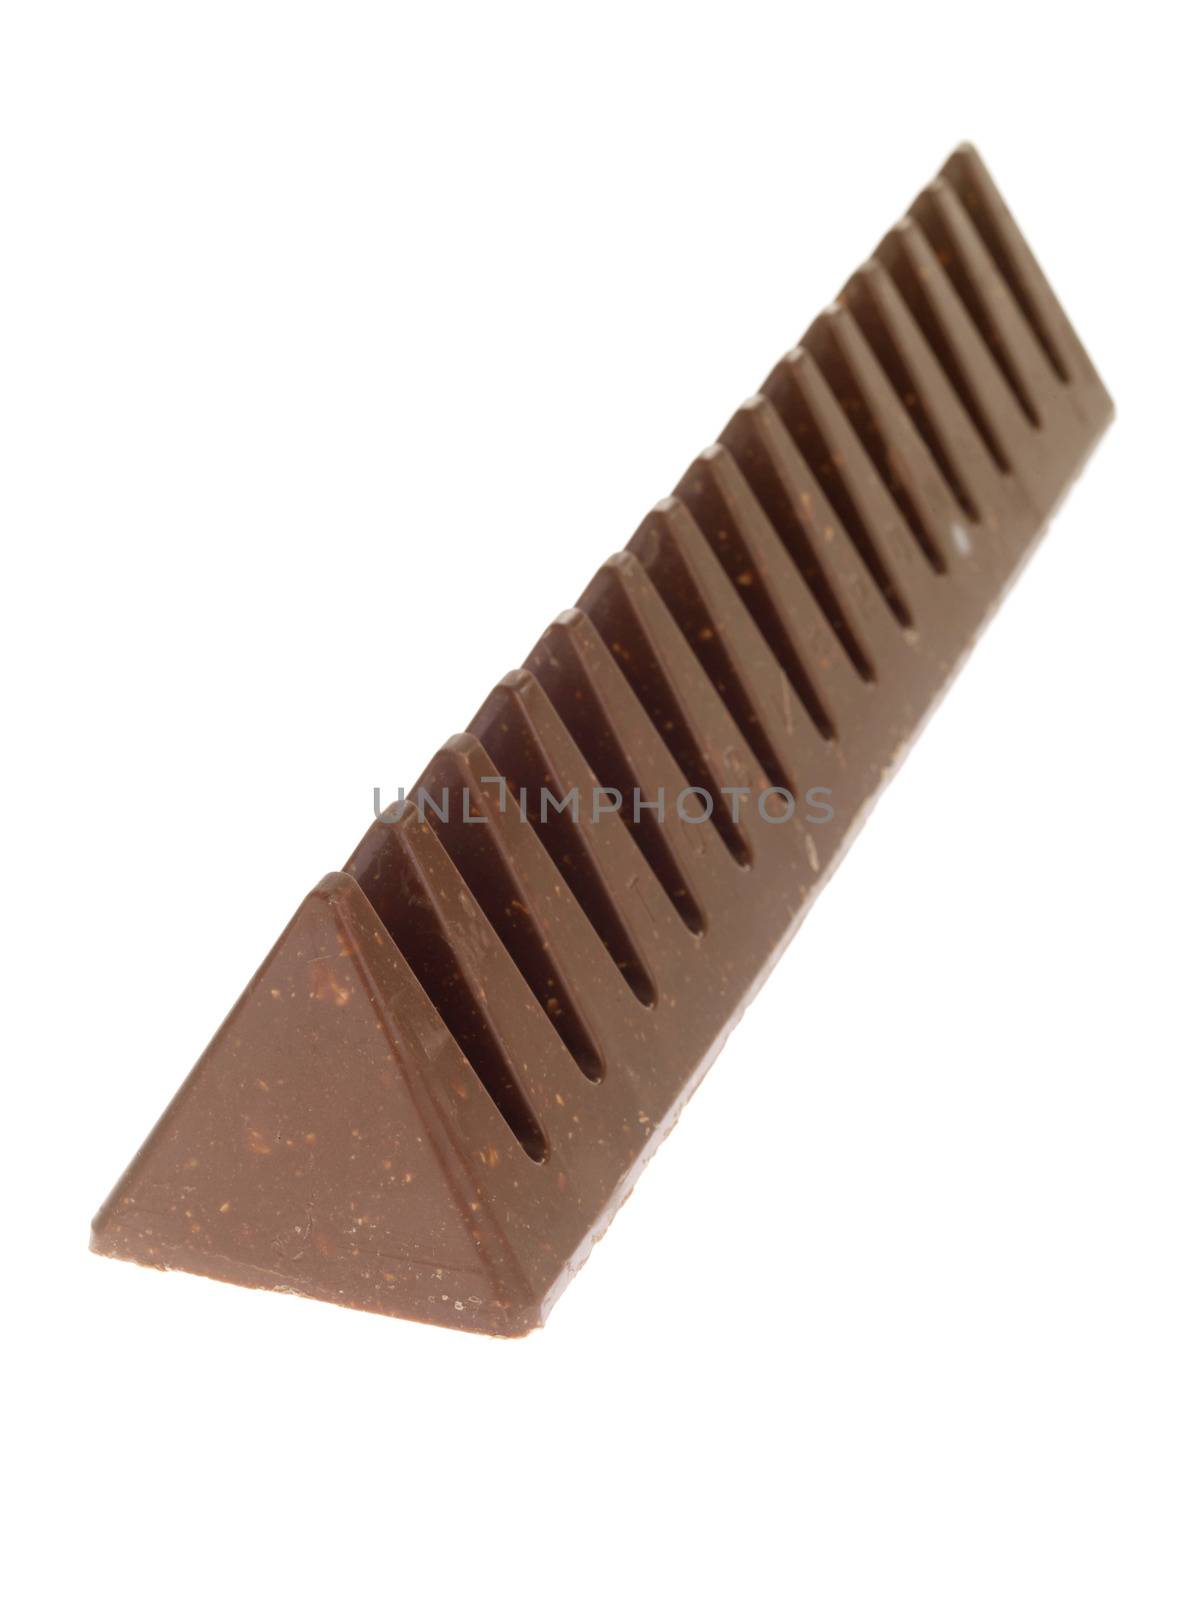 Bar of Chocolate by Whiteboxmedia